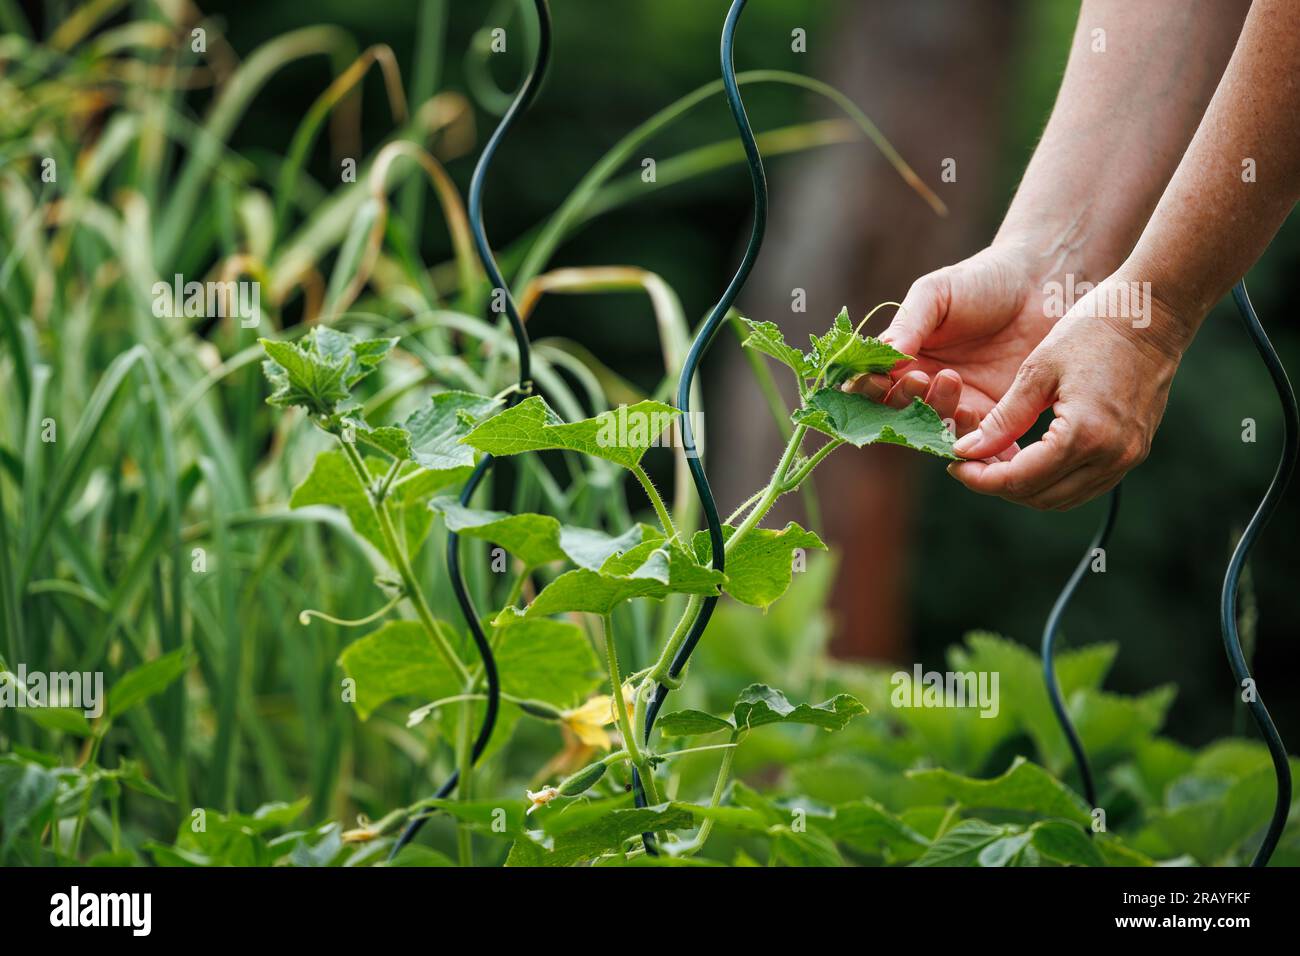 Organic gardening. Woman checks growth of cucumber plant in vegetable garden Stock Photo